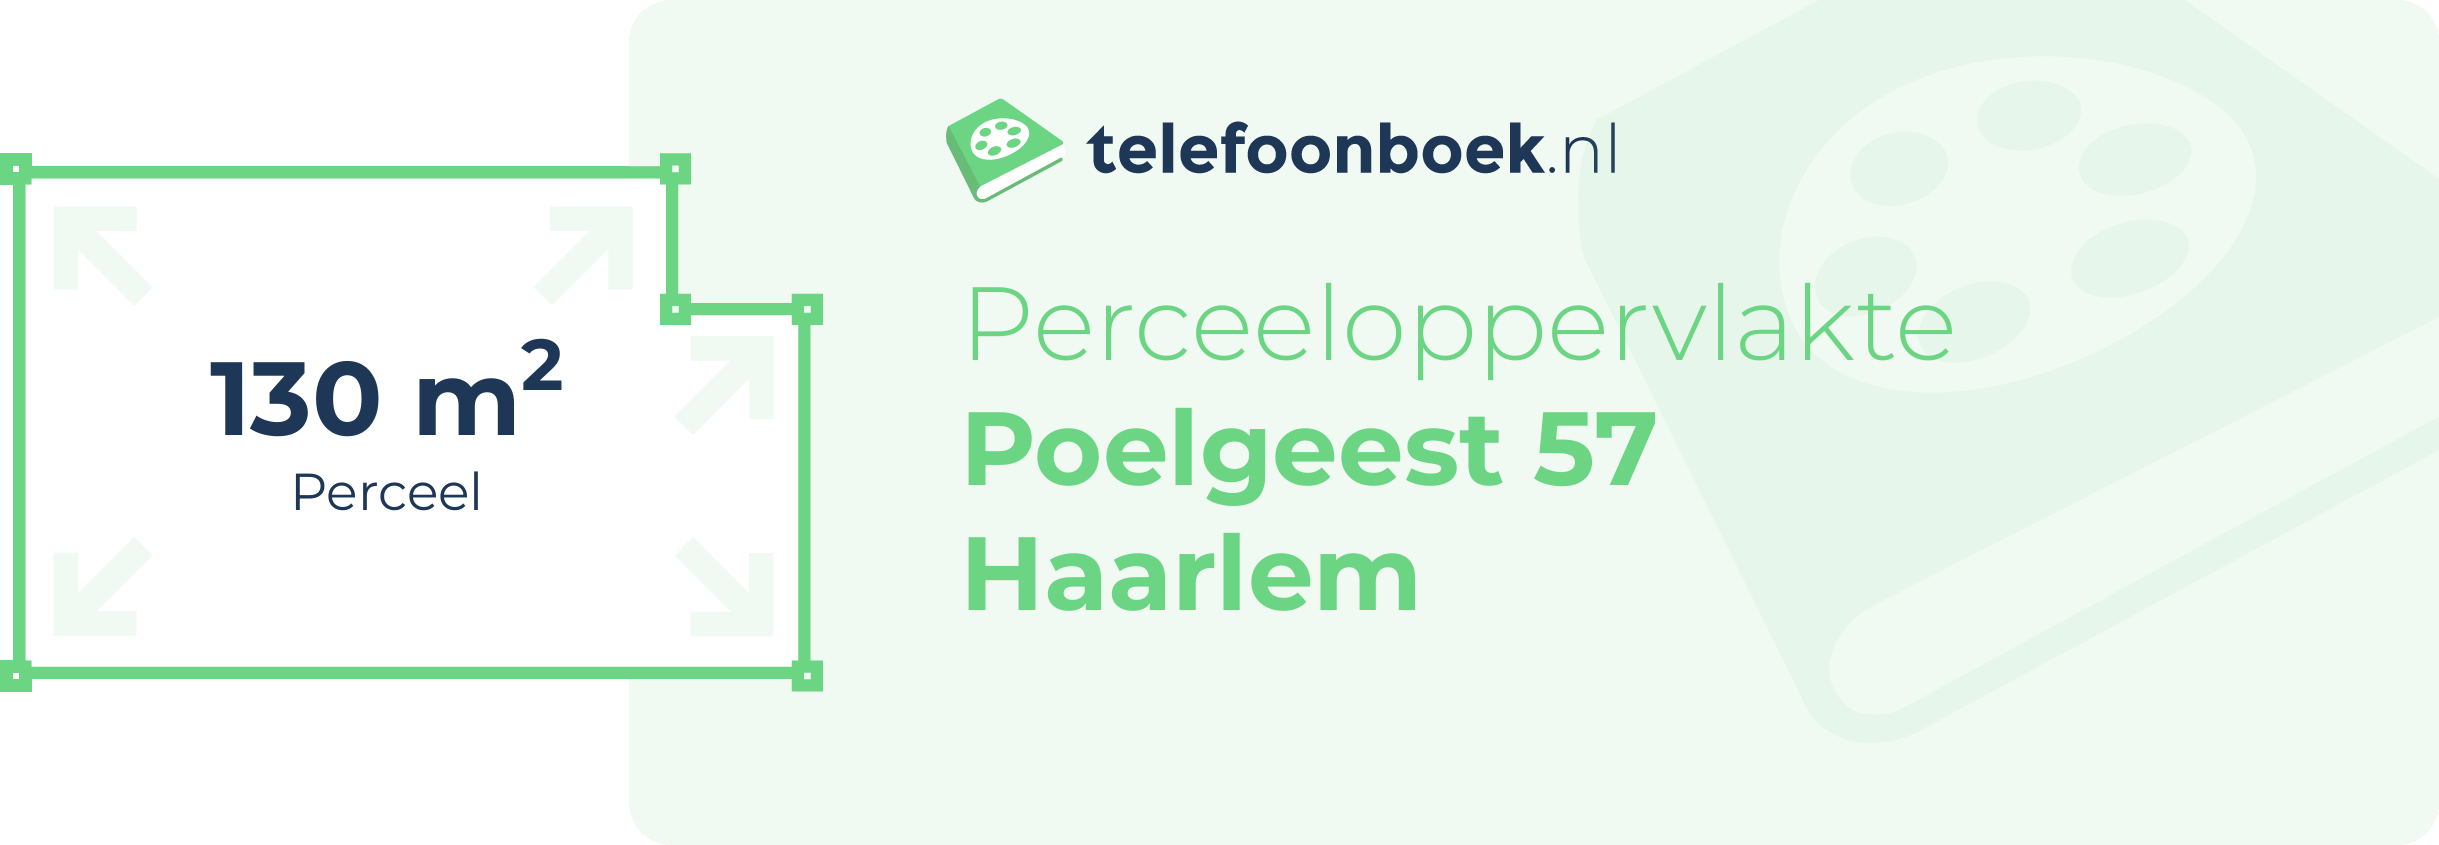 Perceeloppervlakte Poelgeest 57 Haarlem